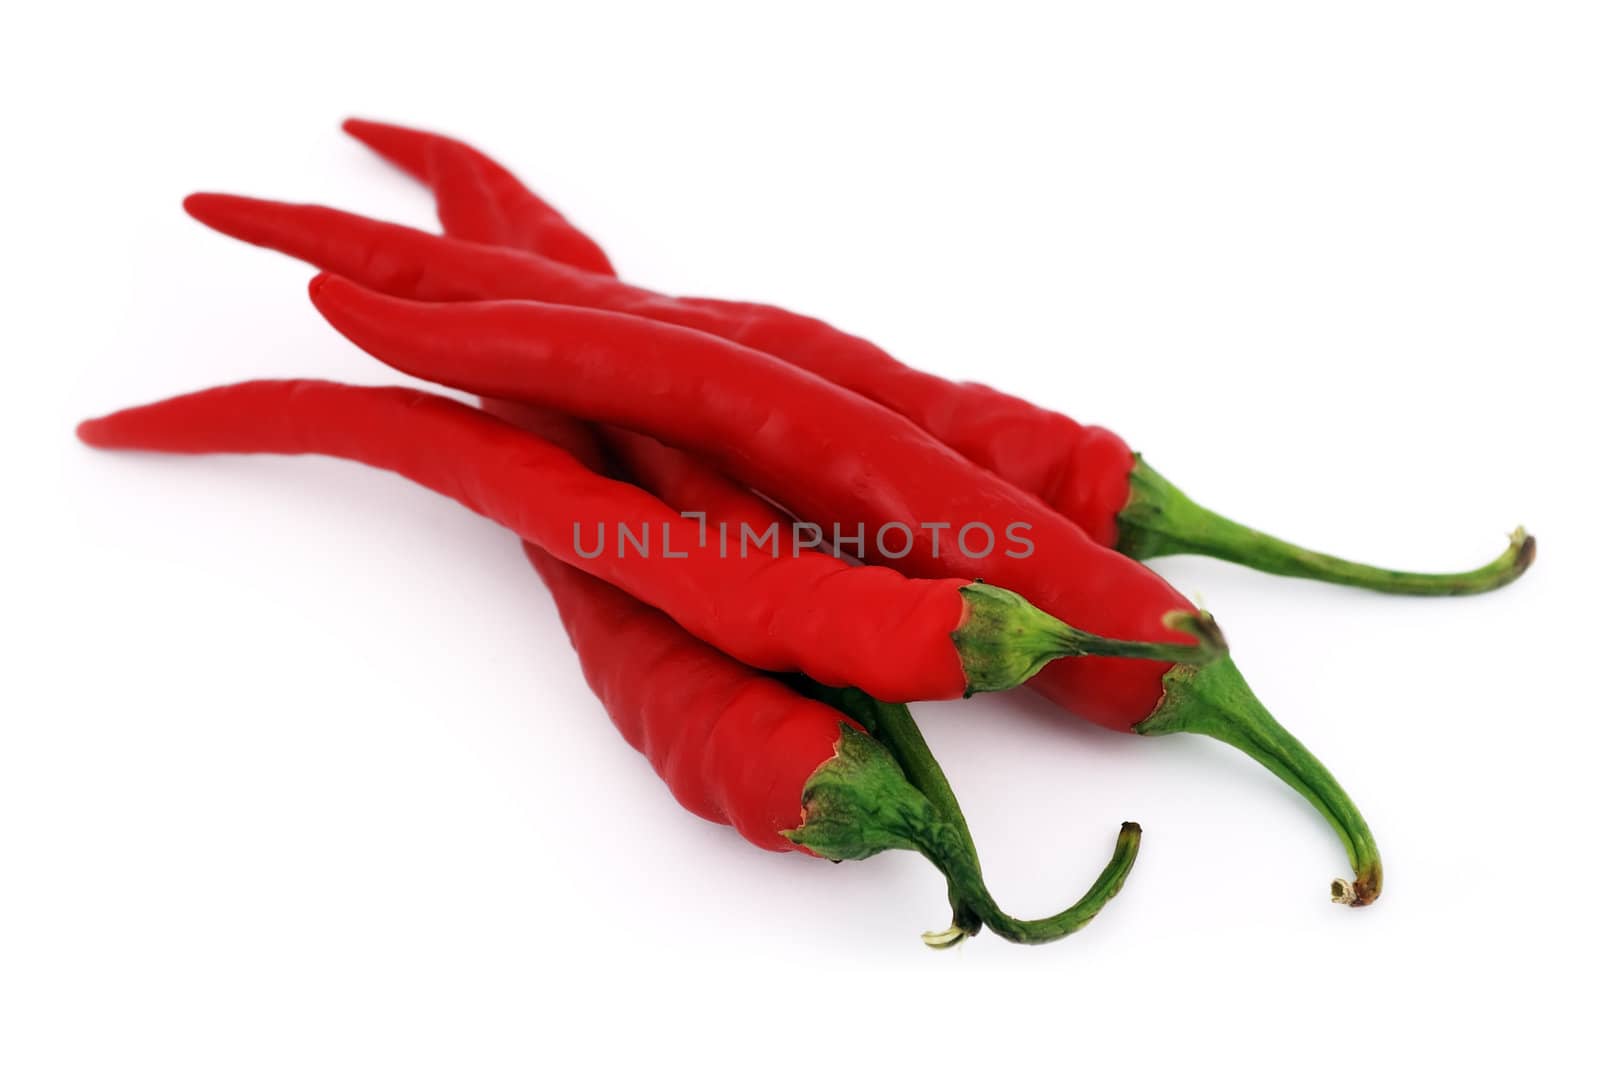 chilli pepper by vetkit